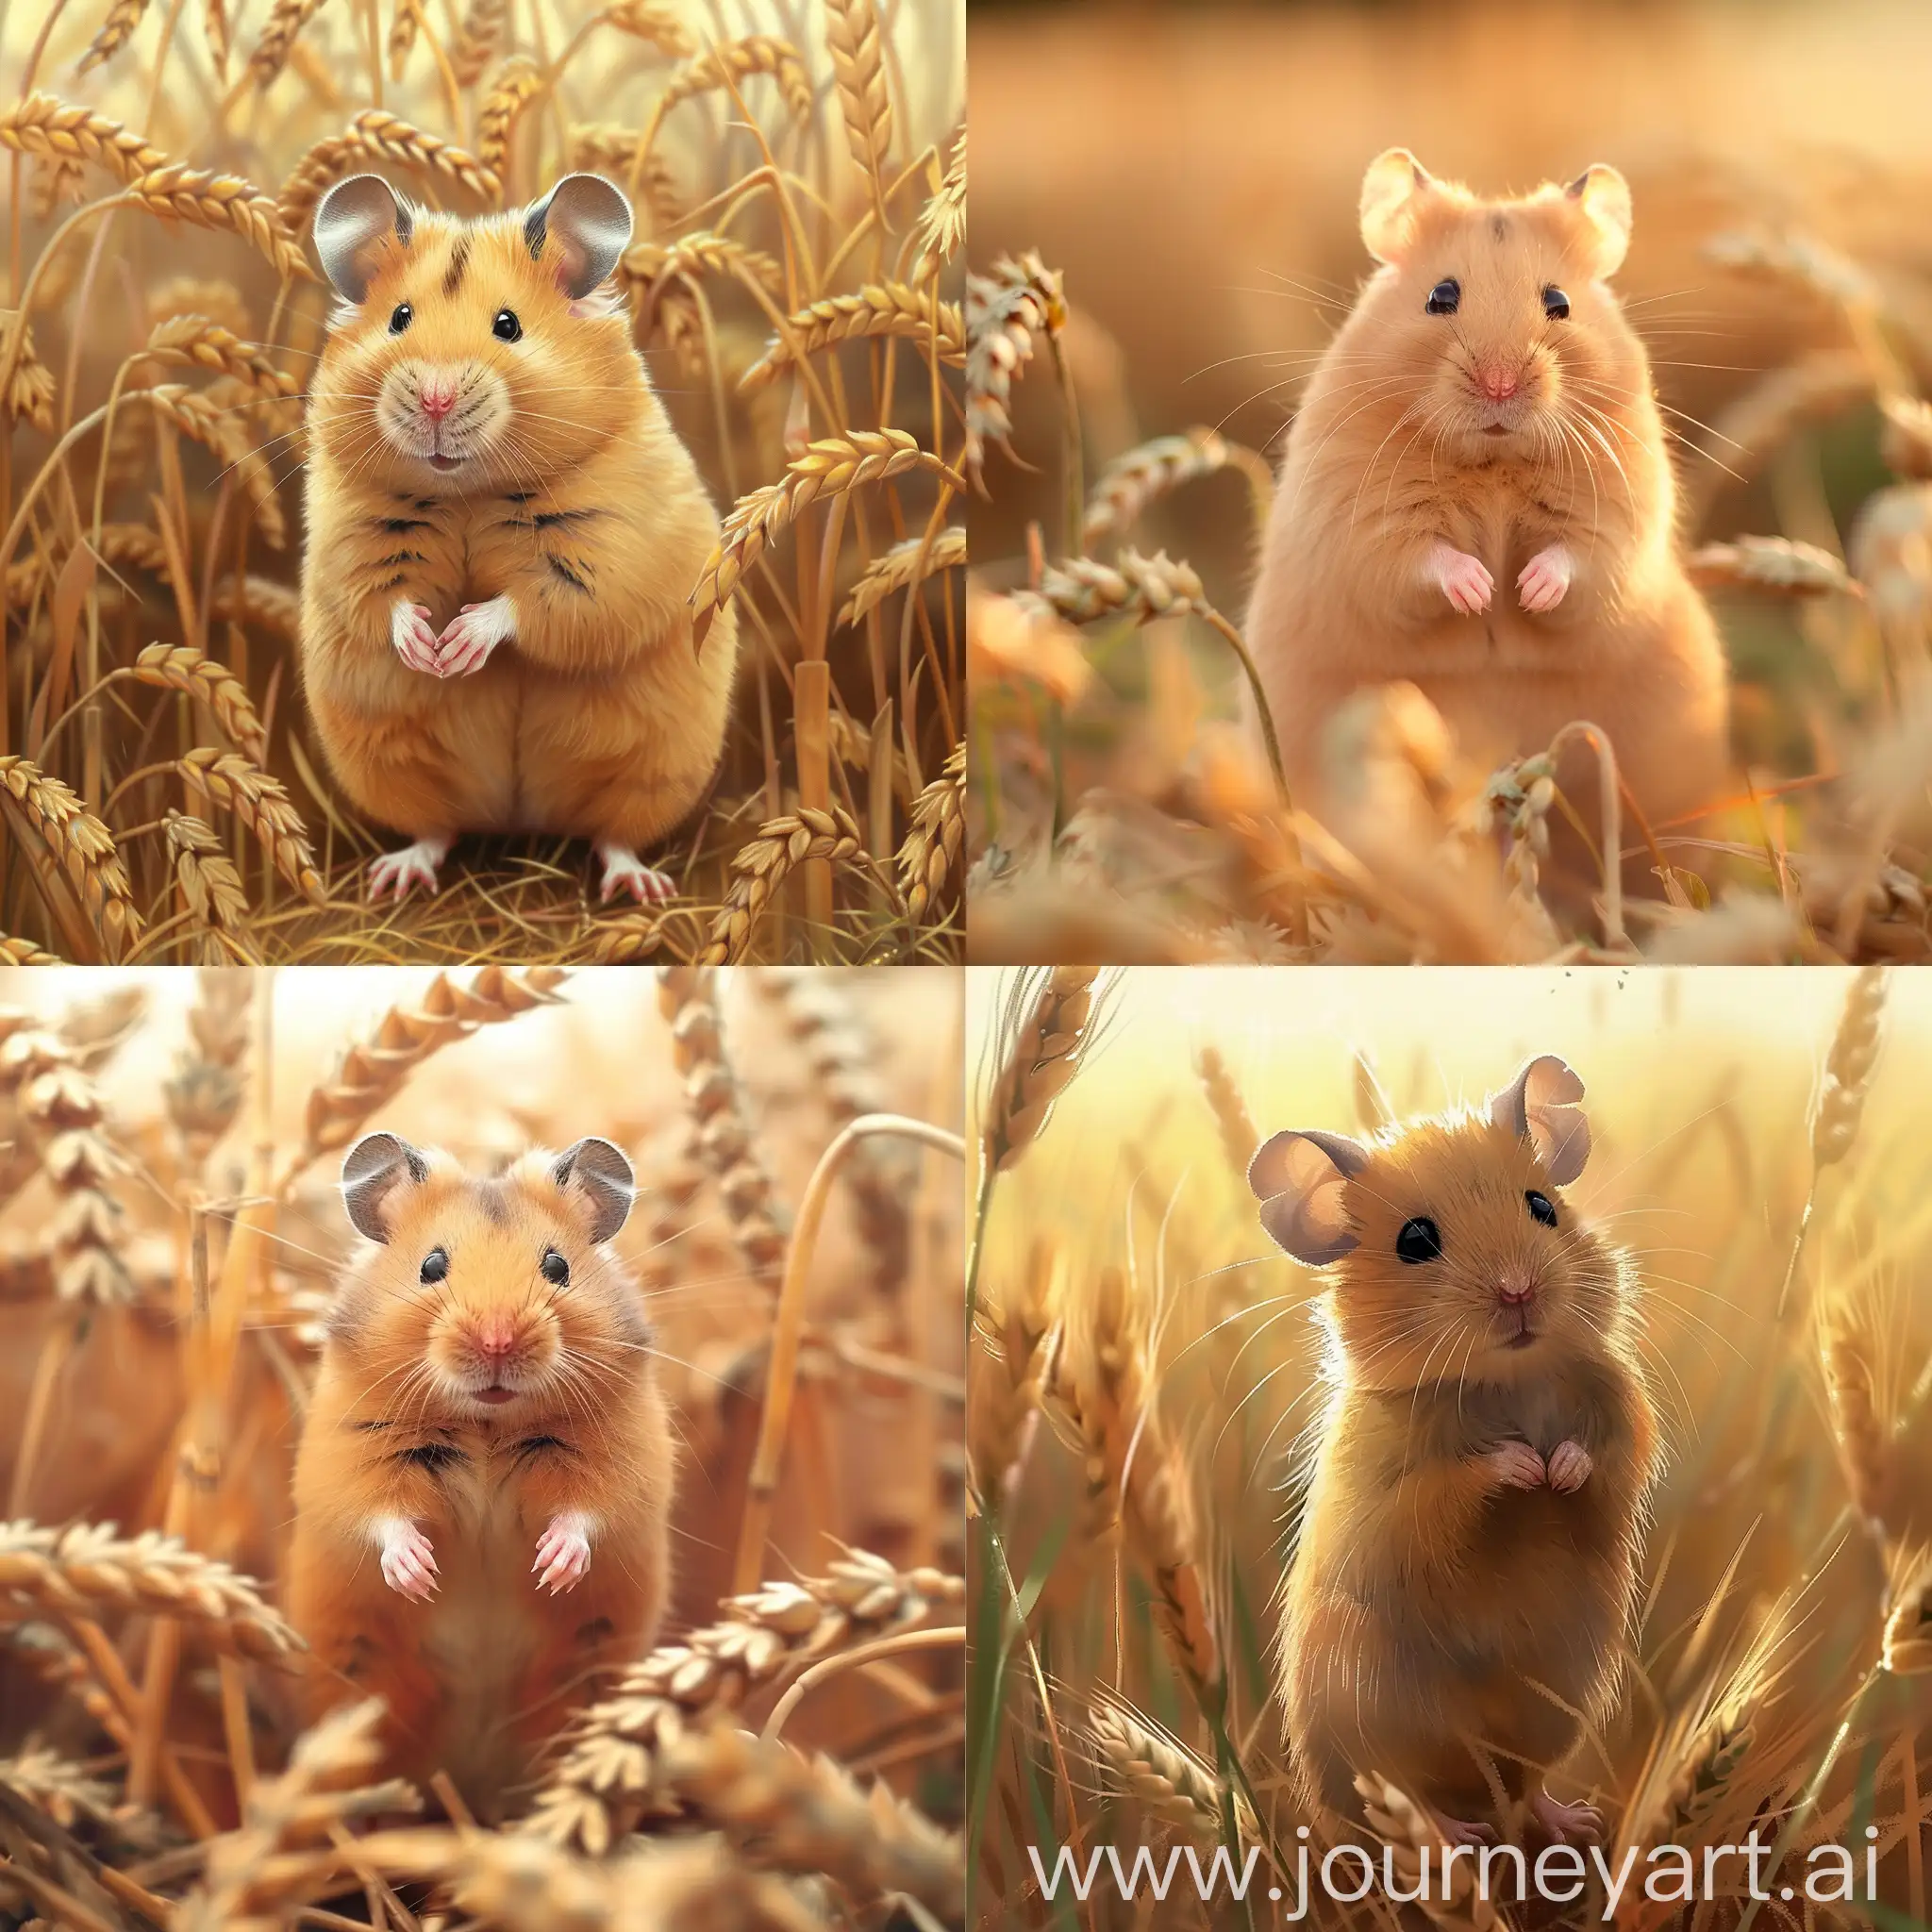 Adorable-Hamster-Enjoying-Sunshine-in-Wheat-Field